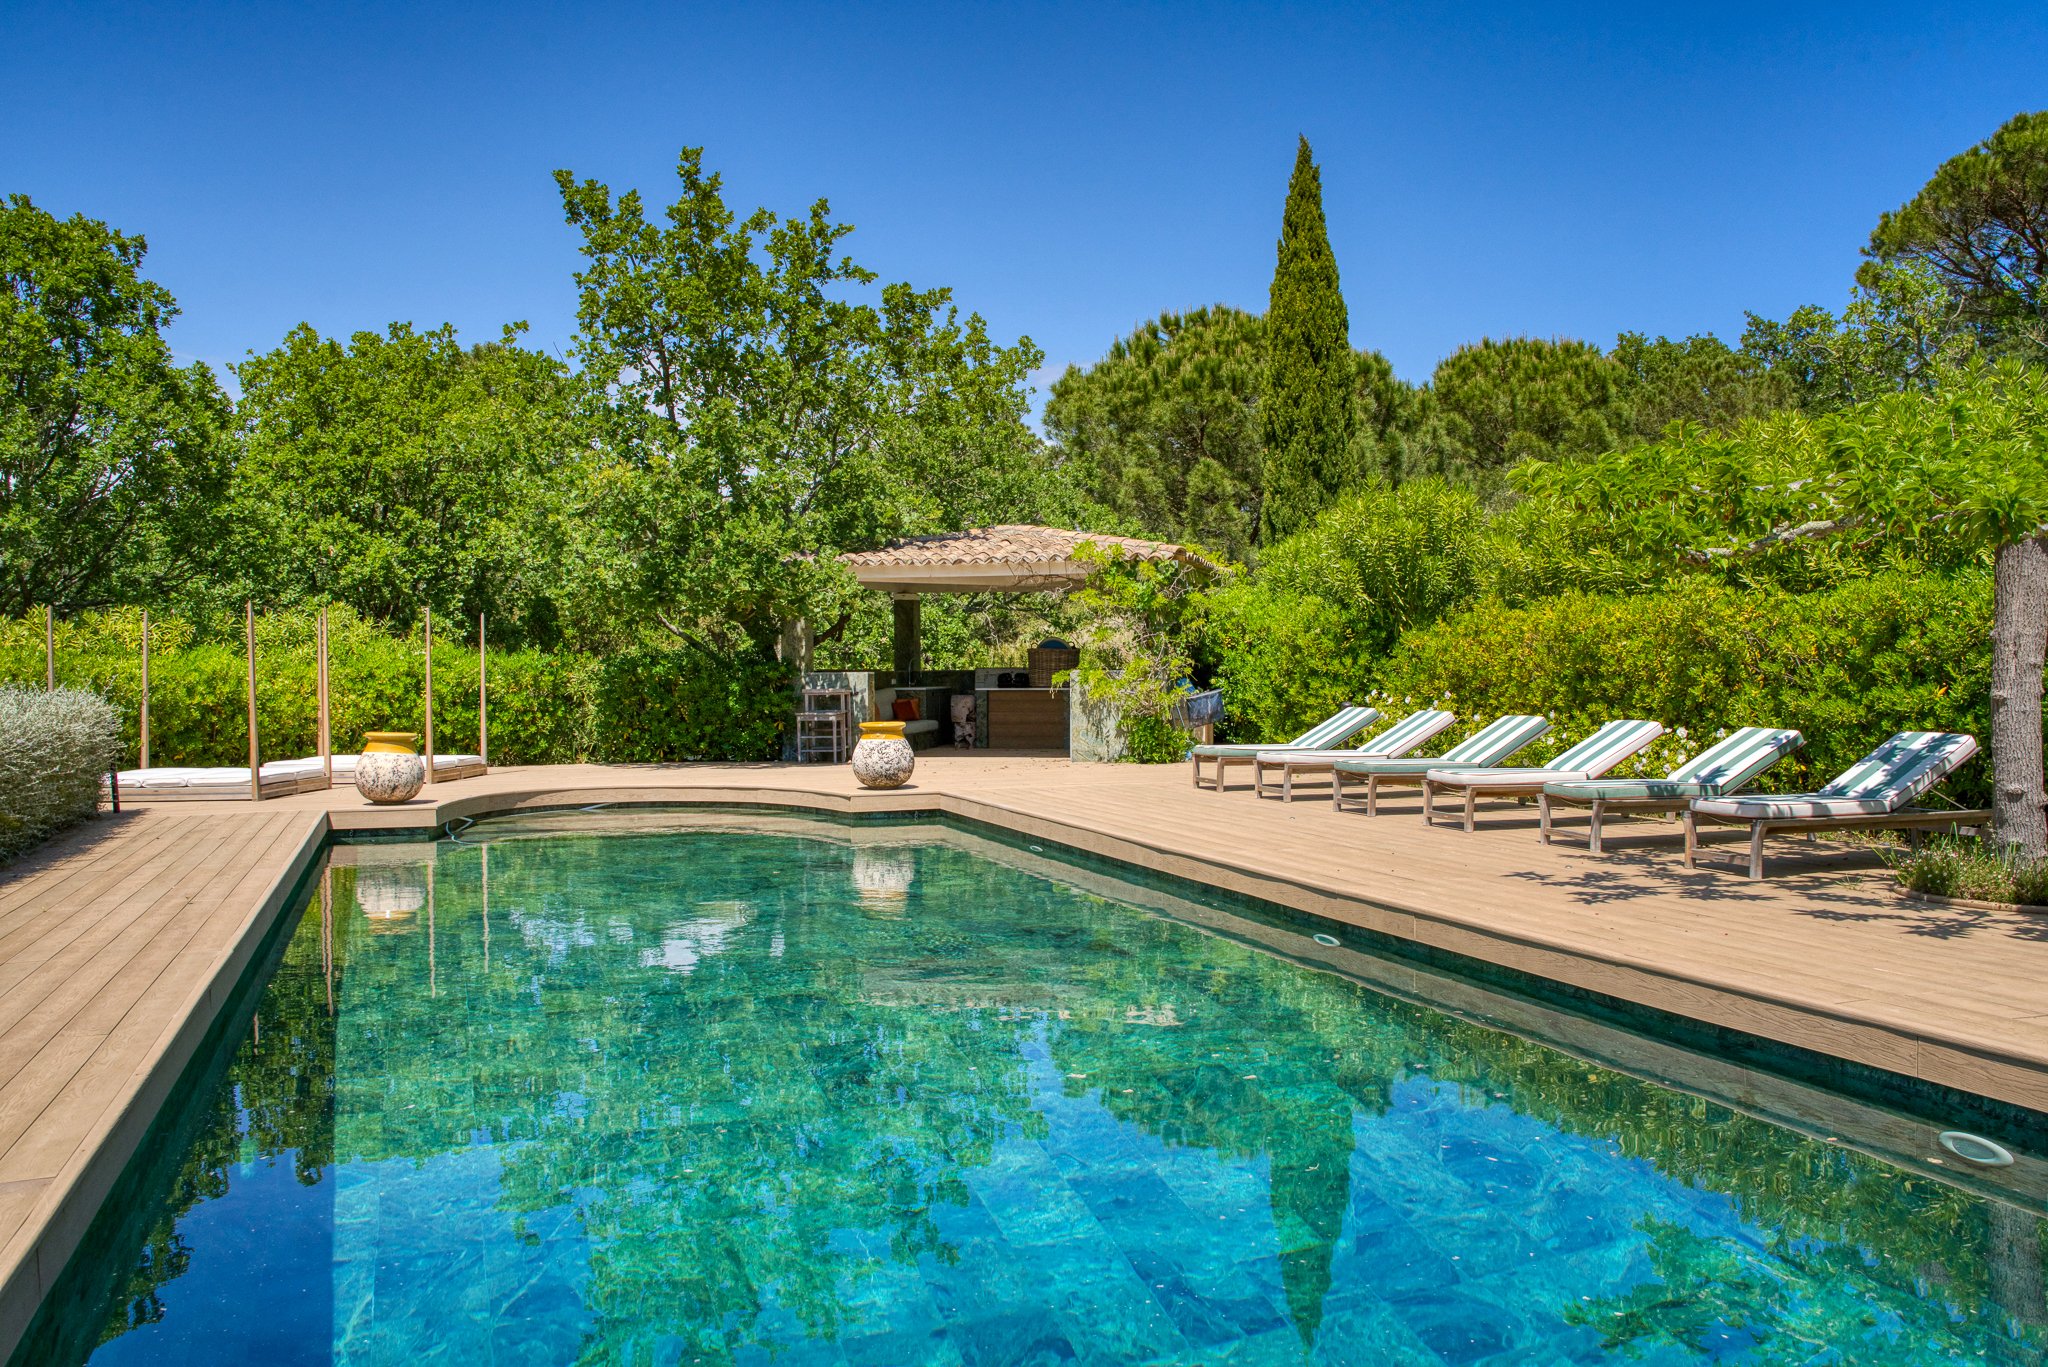 Francis York Exclusive French Riviera Villa On the Gulf of Saint-Tropez  00003.jpg